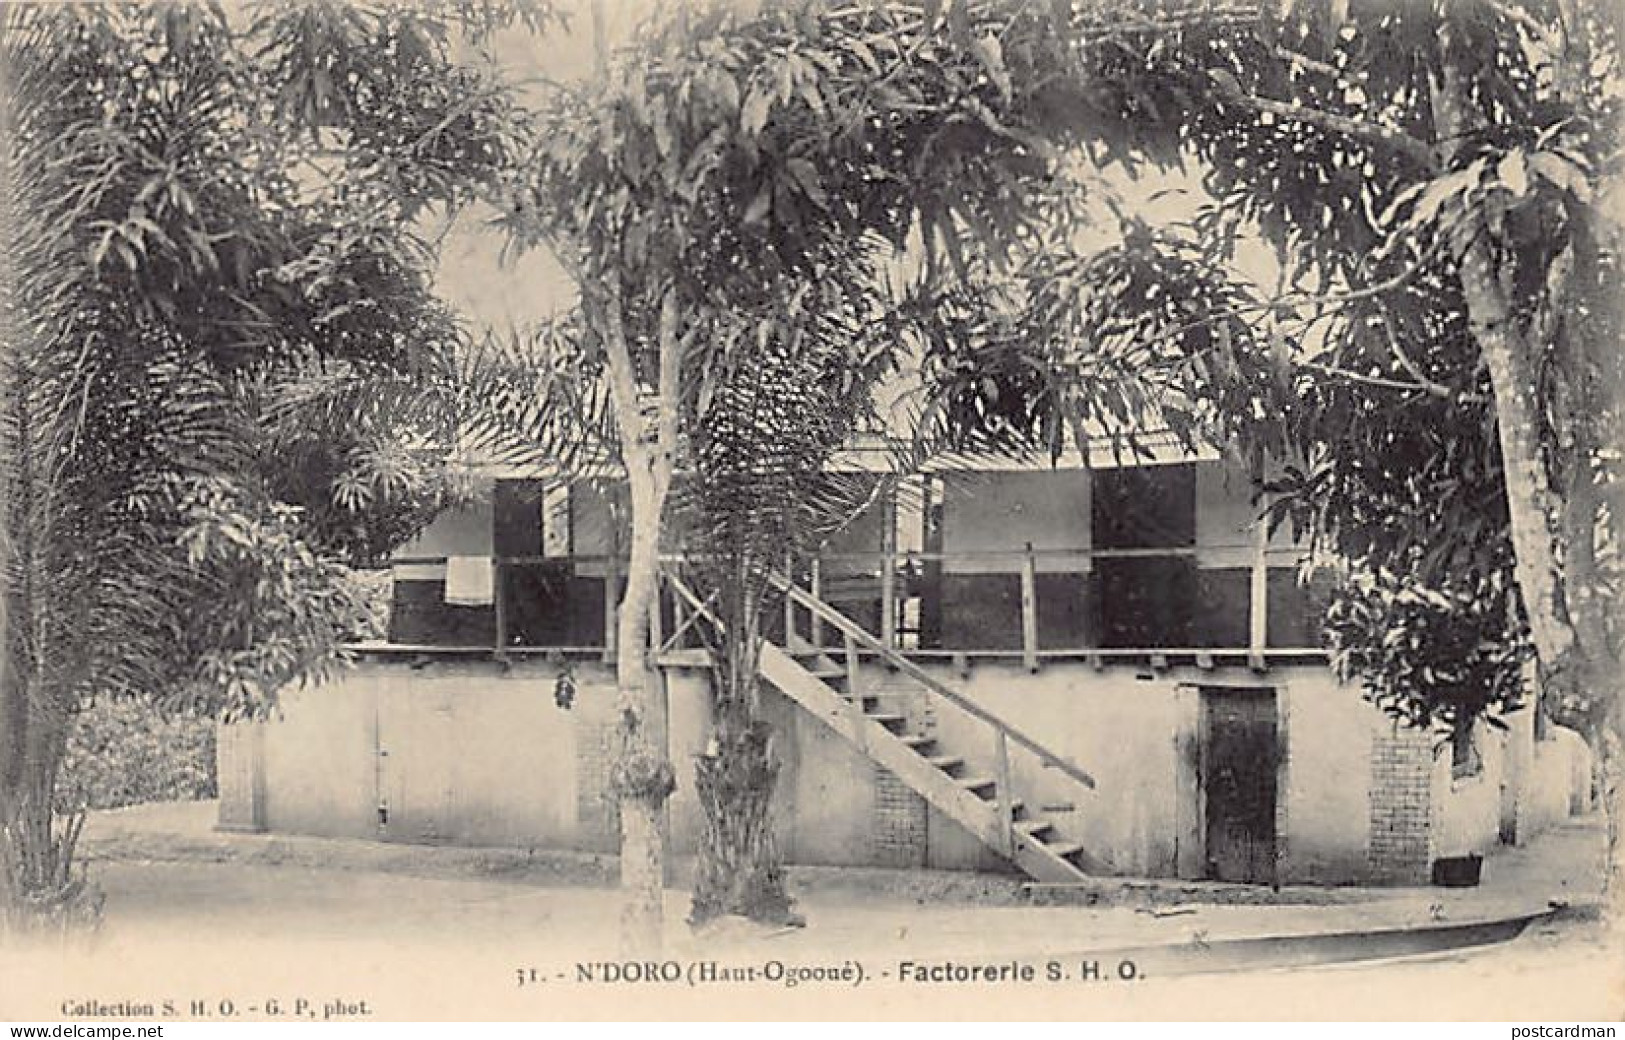 Gabon - N'DORO - Factorerie S.H.O. Société Haut-Ogoué - Ed. S.H.O. - G.P. 31 - Gabon